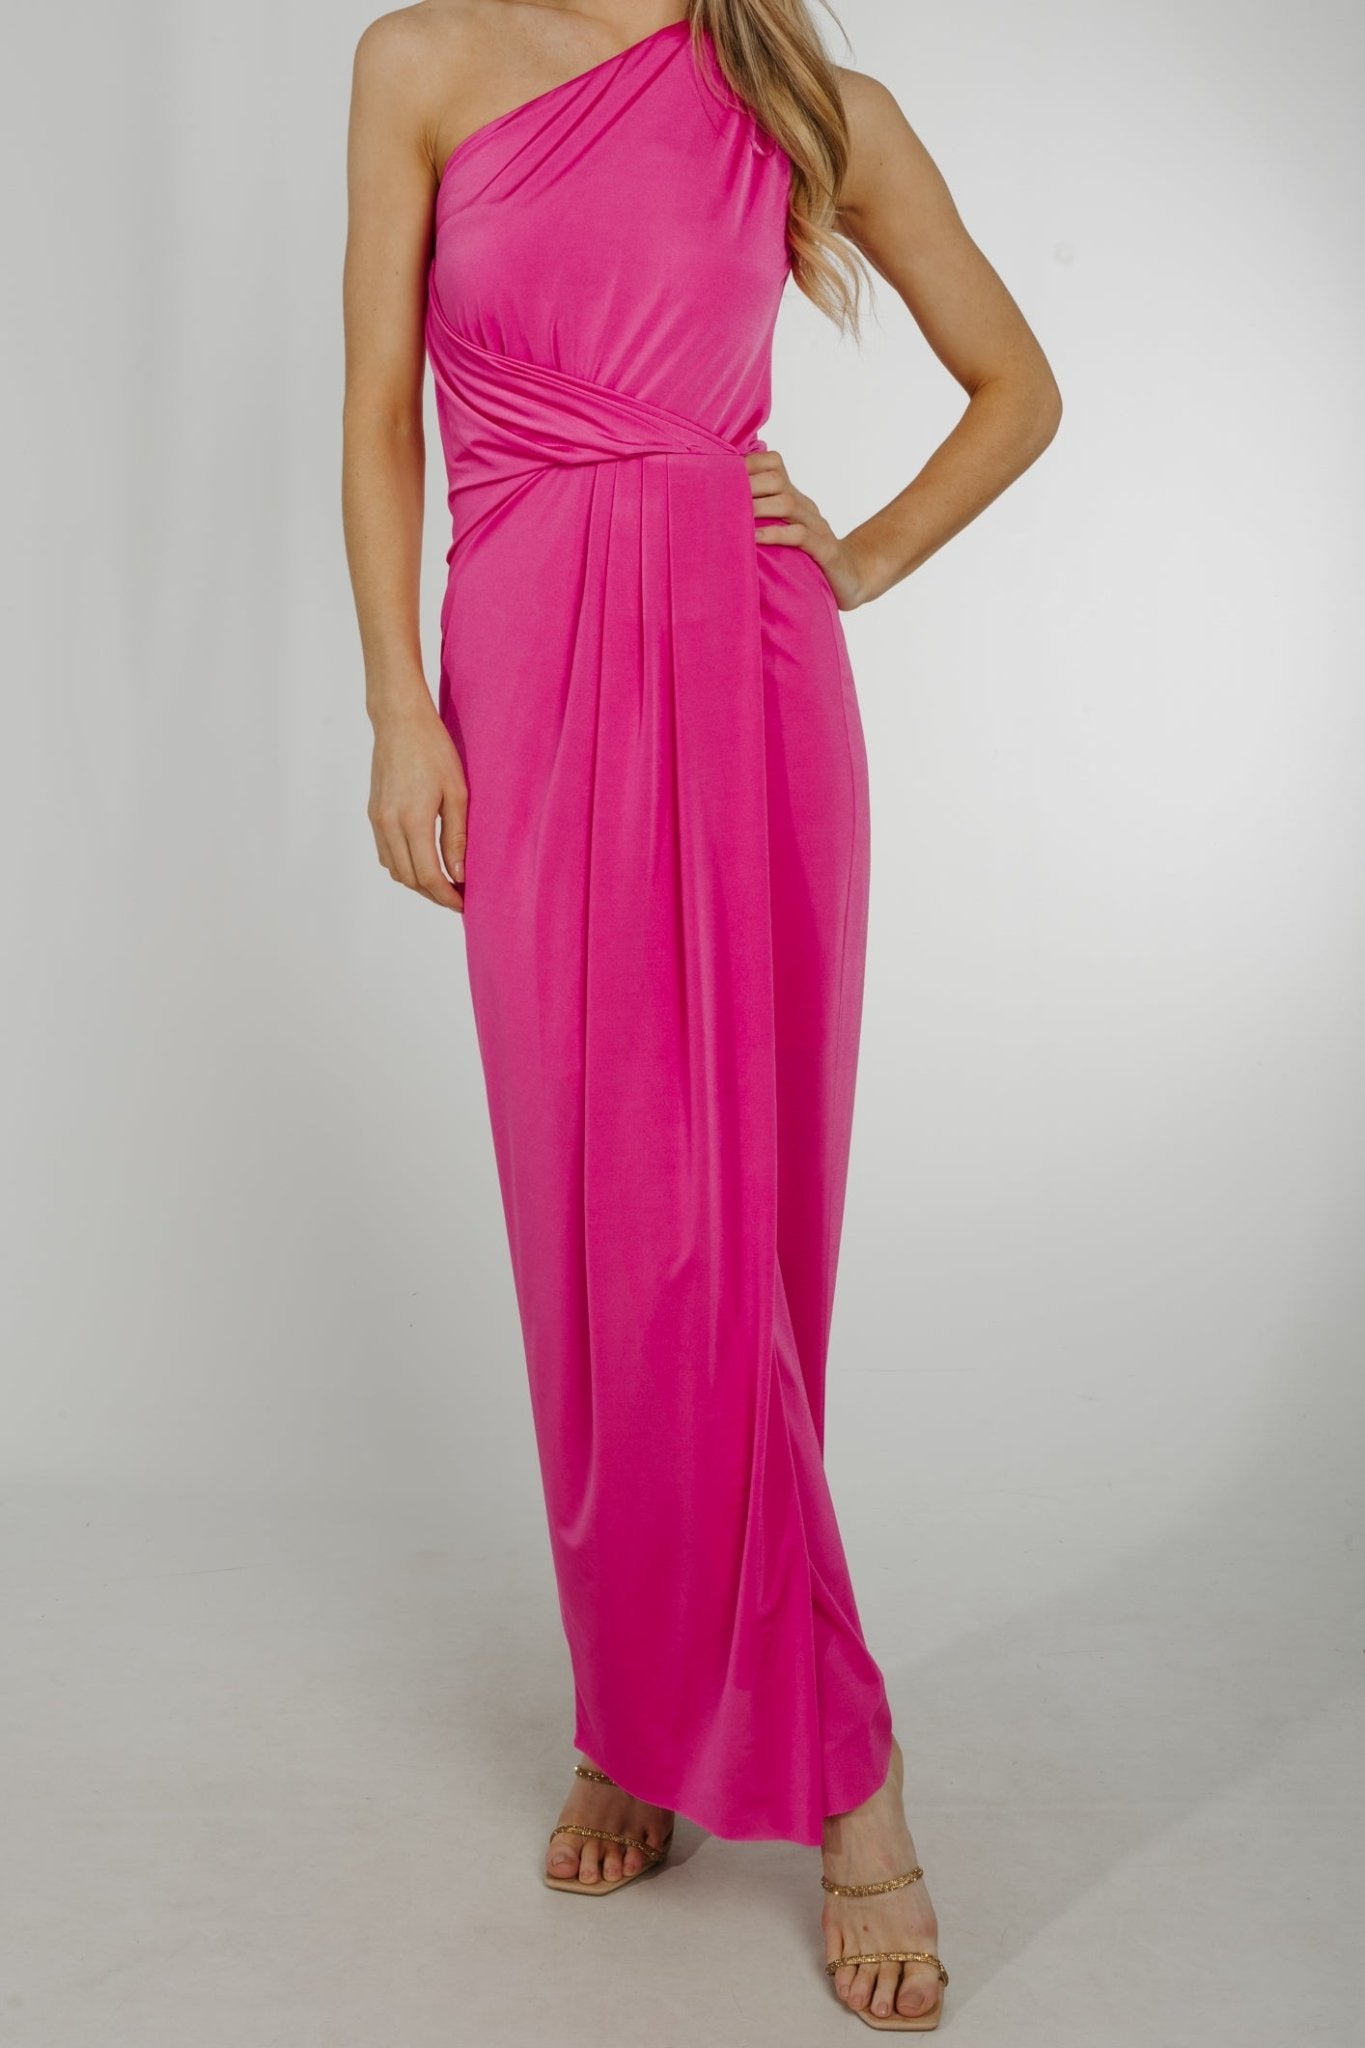 Alana Drape Front Dress In Pink - The Walk in Wardrobe